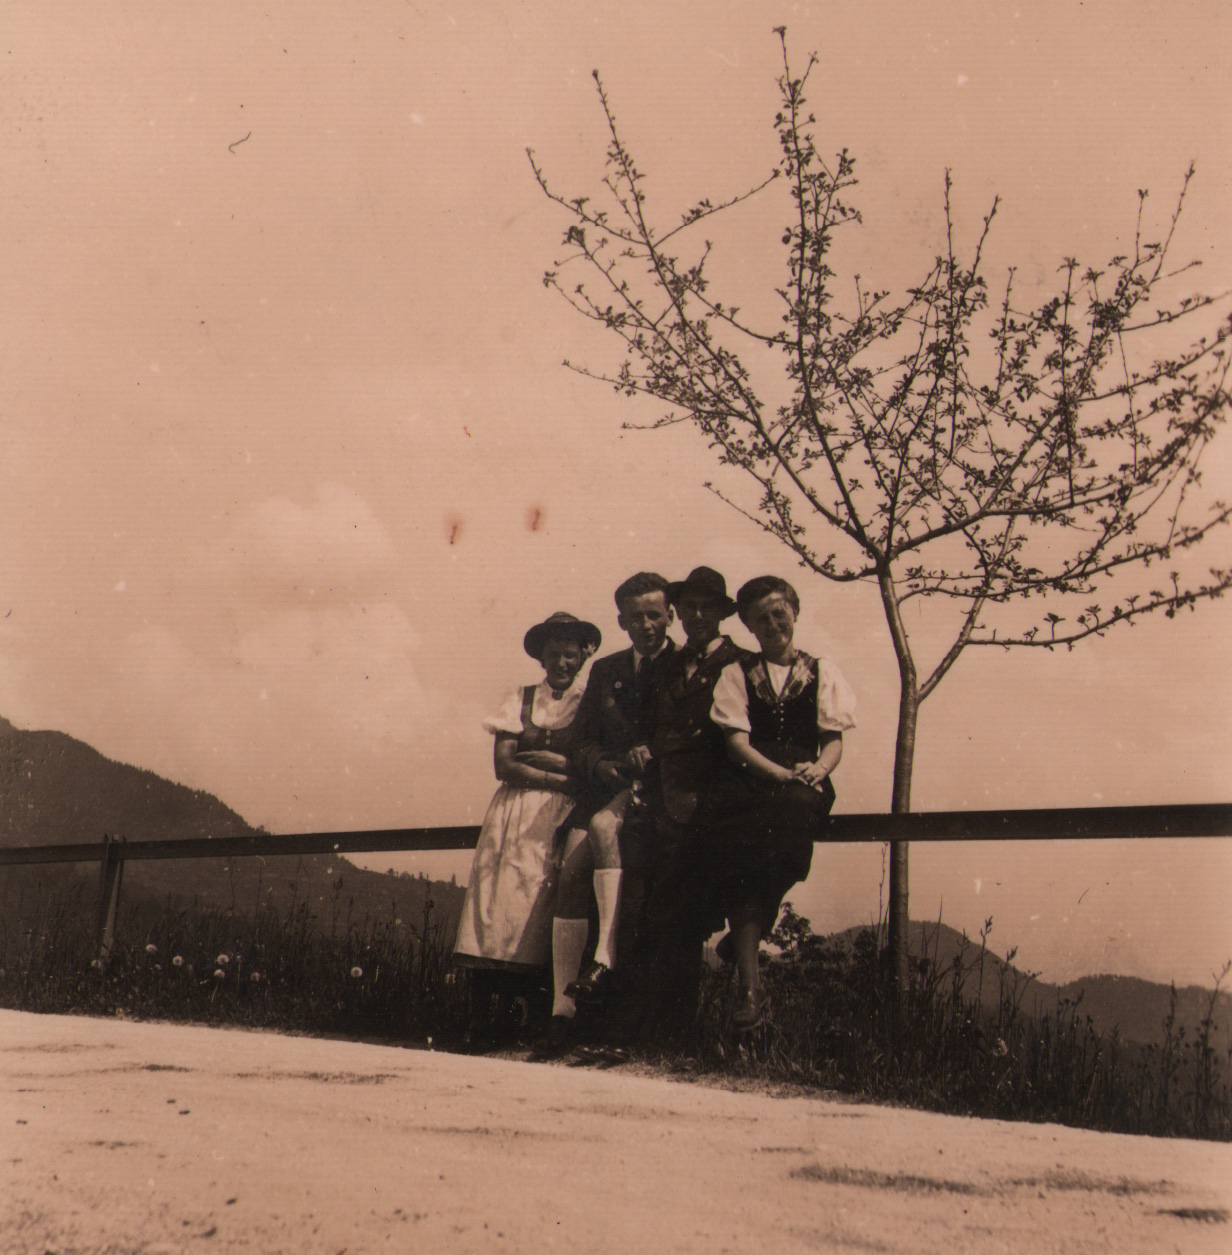 Slika 5: Učitelji osnovne šole na Vranskem med izletom na Trojanah (v
                        sredini Sepp Hoffmann in Heinrich Liebscher), 1941 